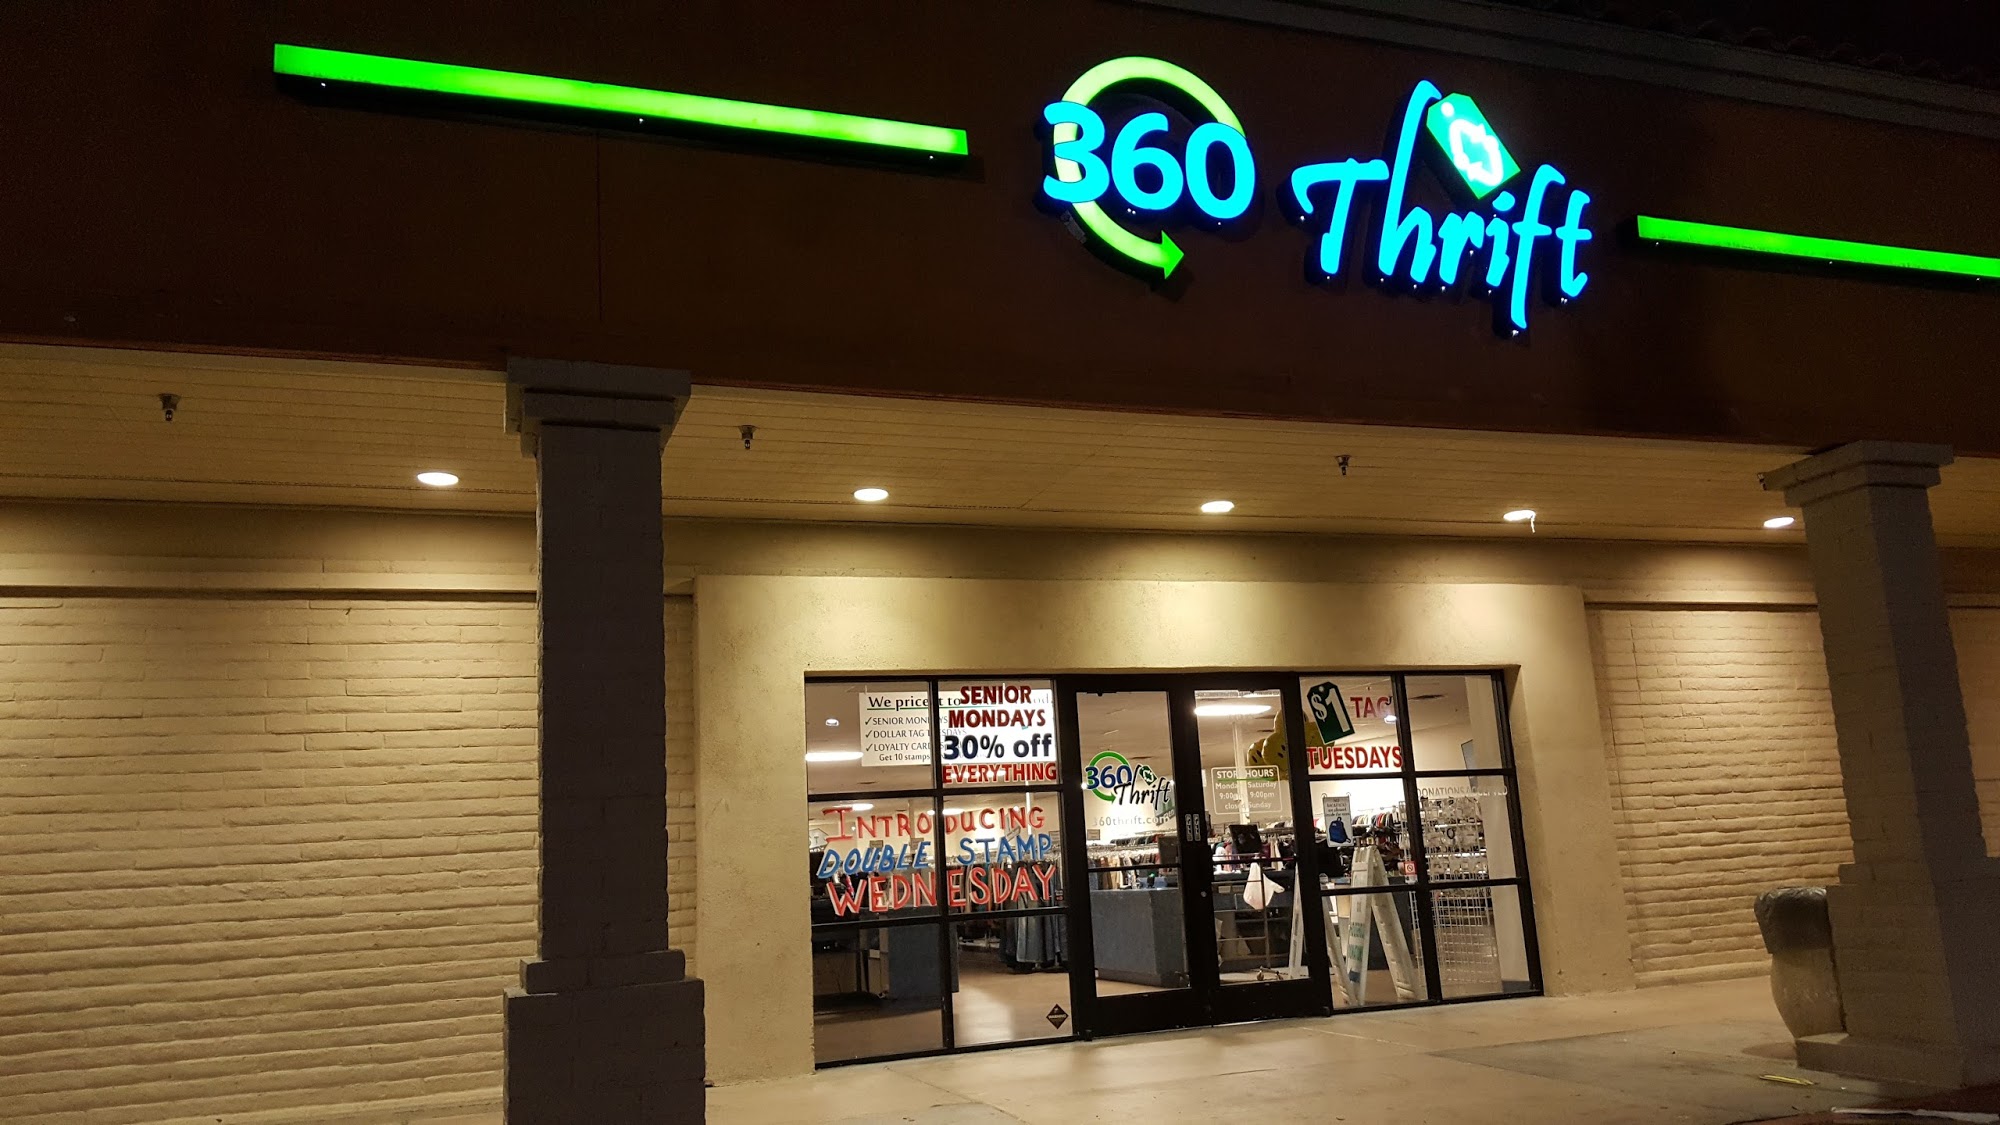 360 Thrift